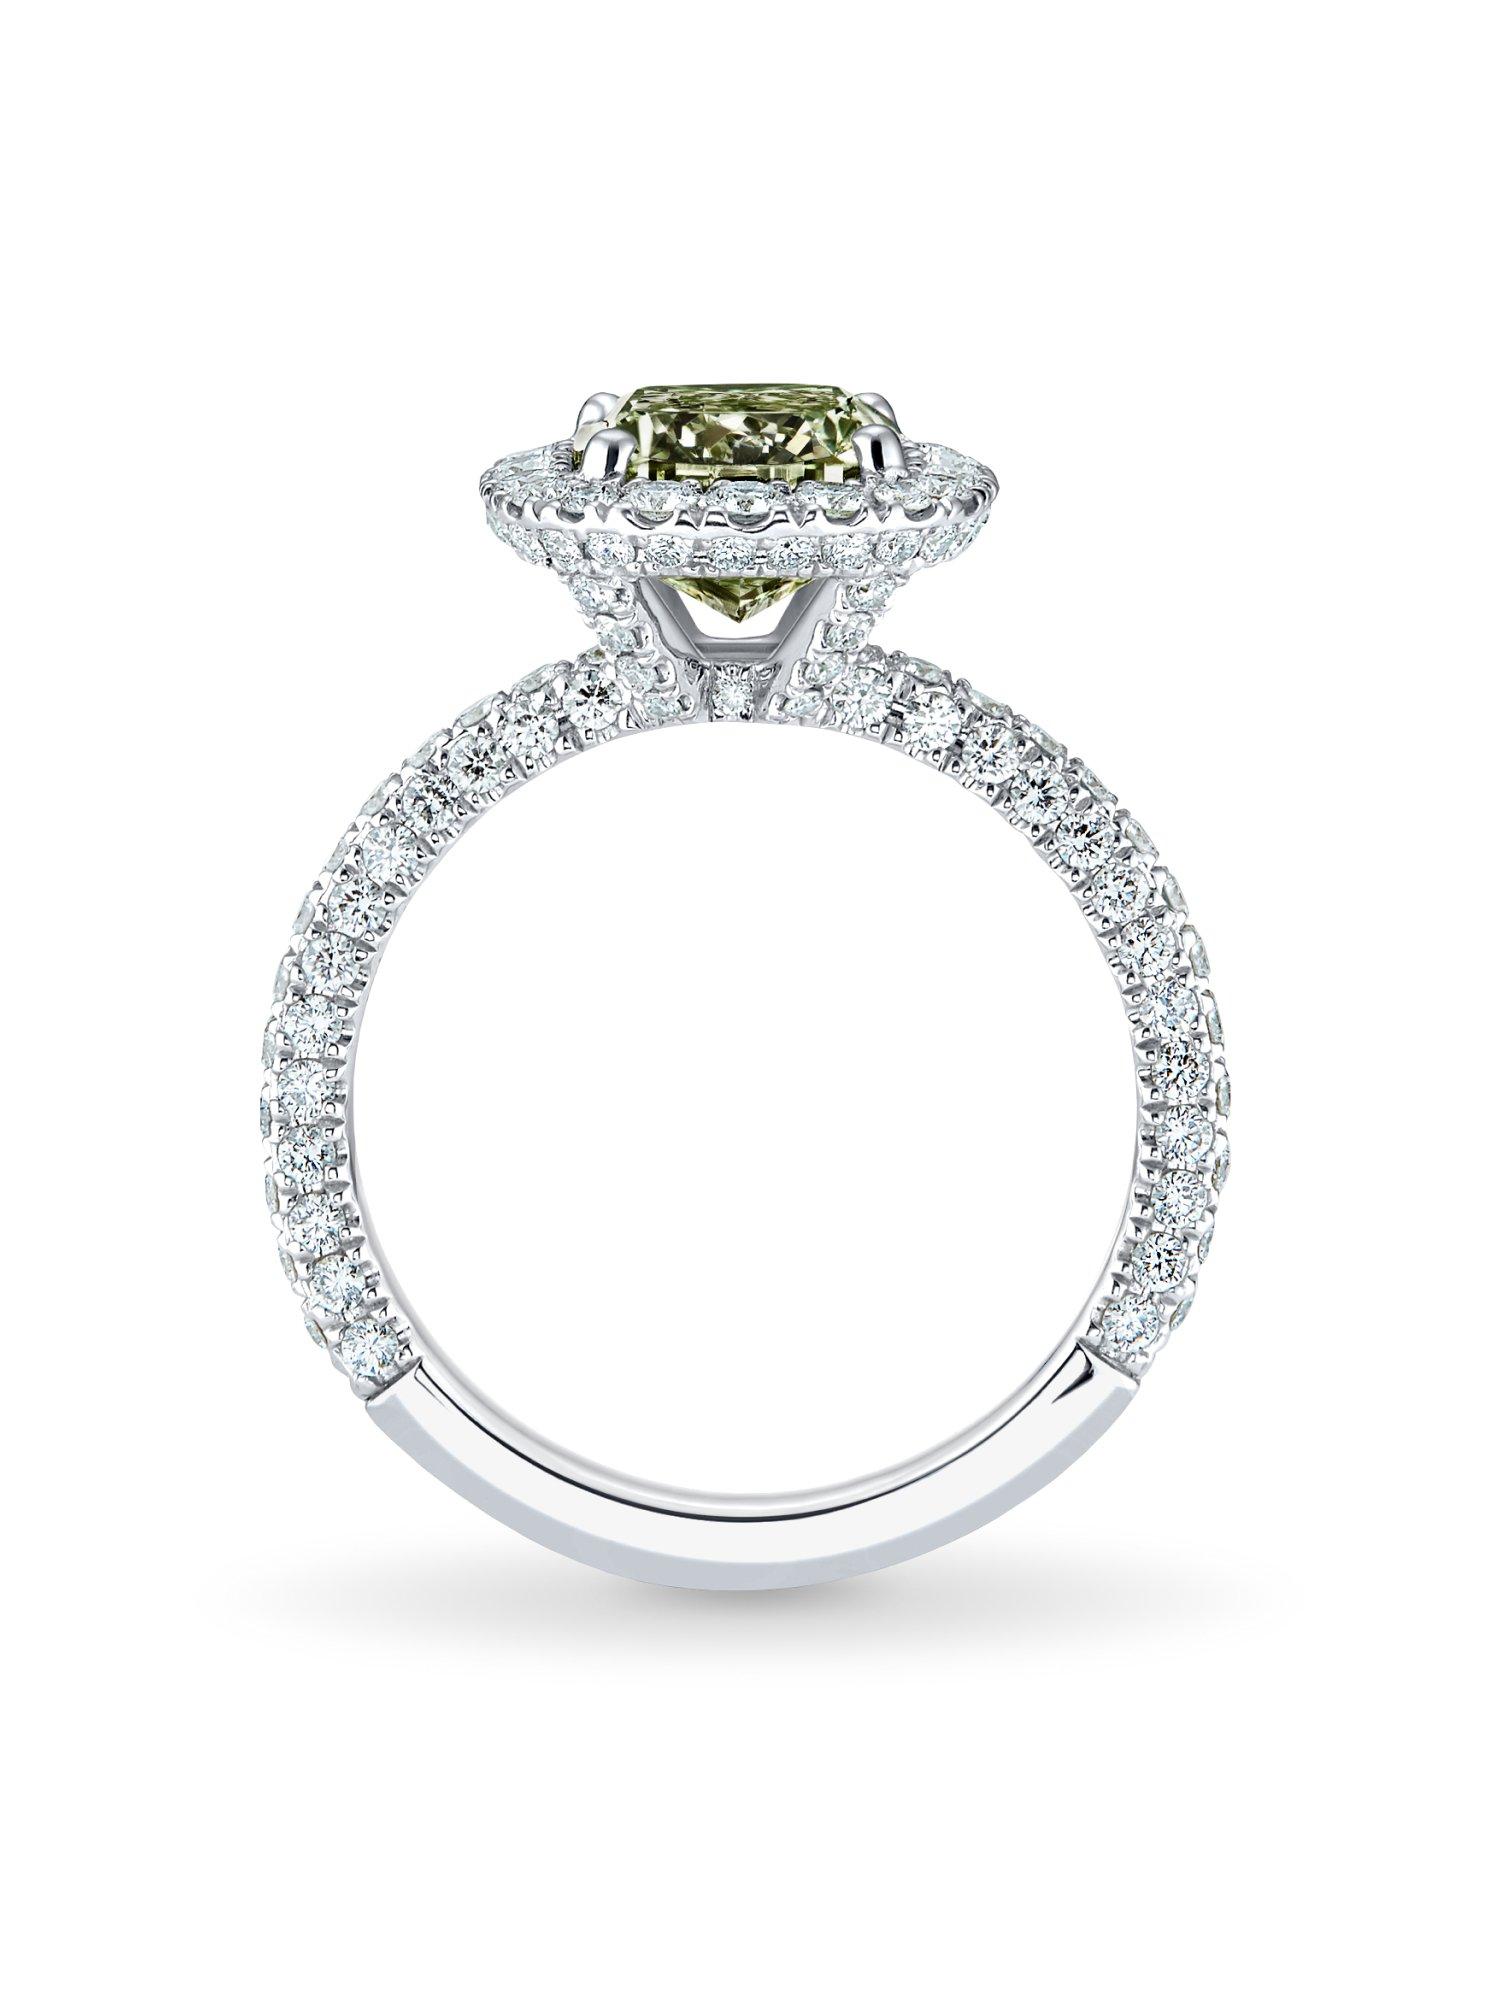 Aura fancy yellow-green cushion-cut diamond ring, image 1